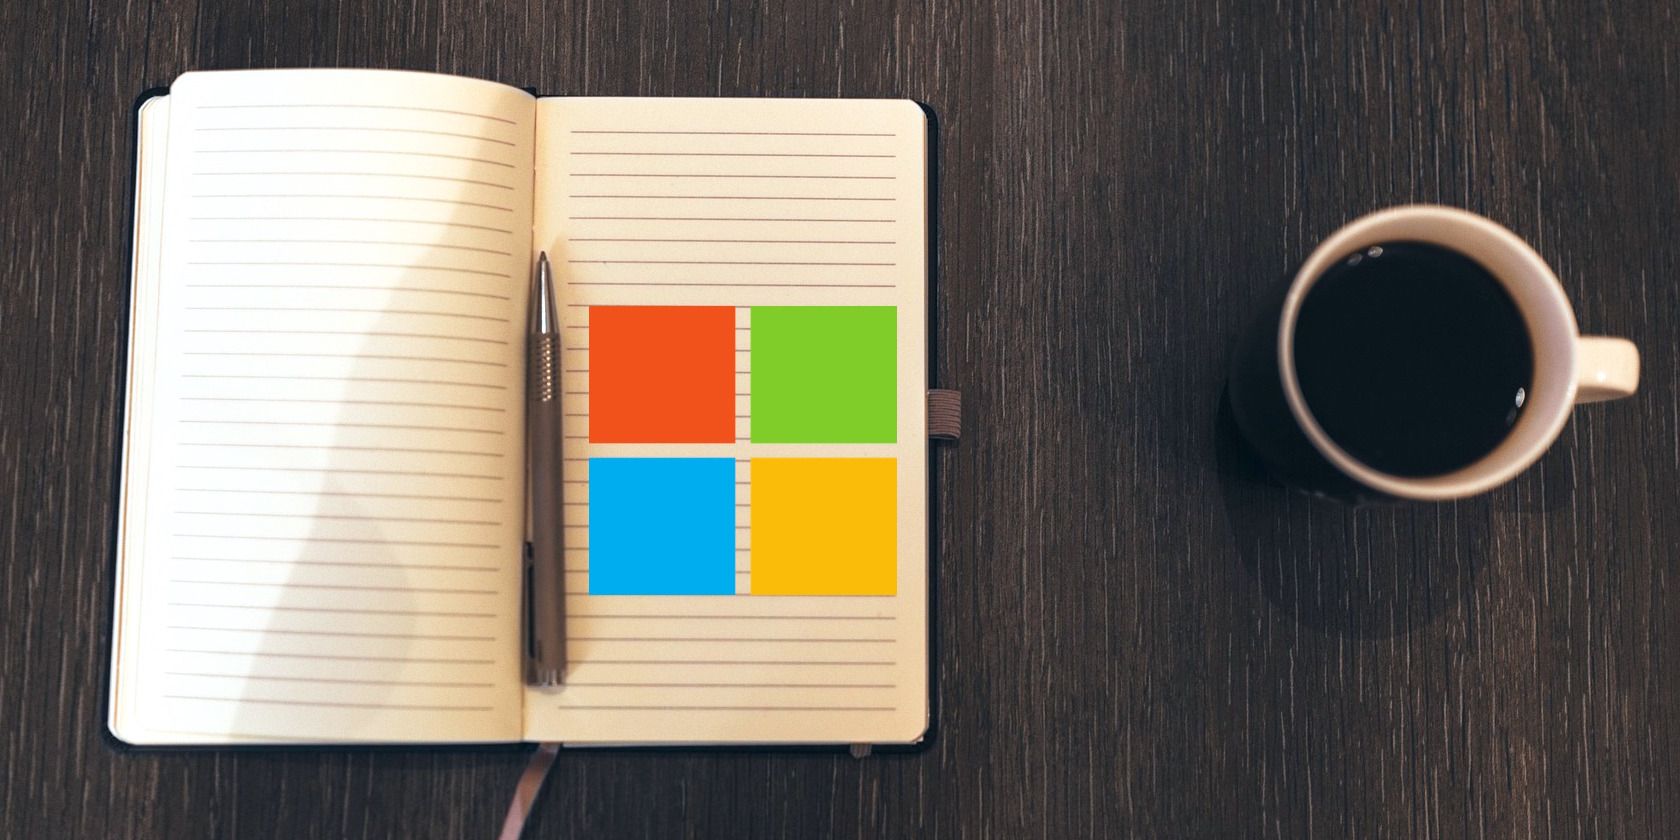 windows-notepad-journal